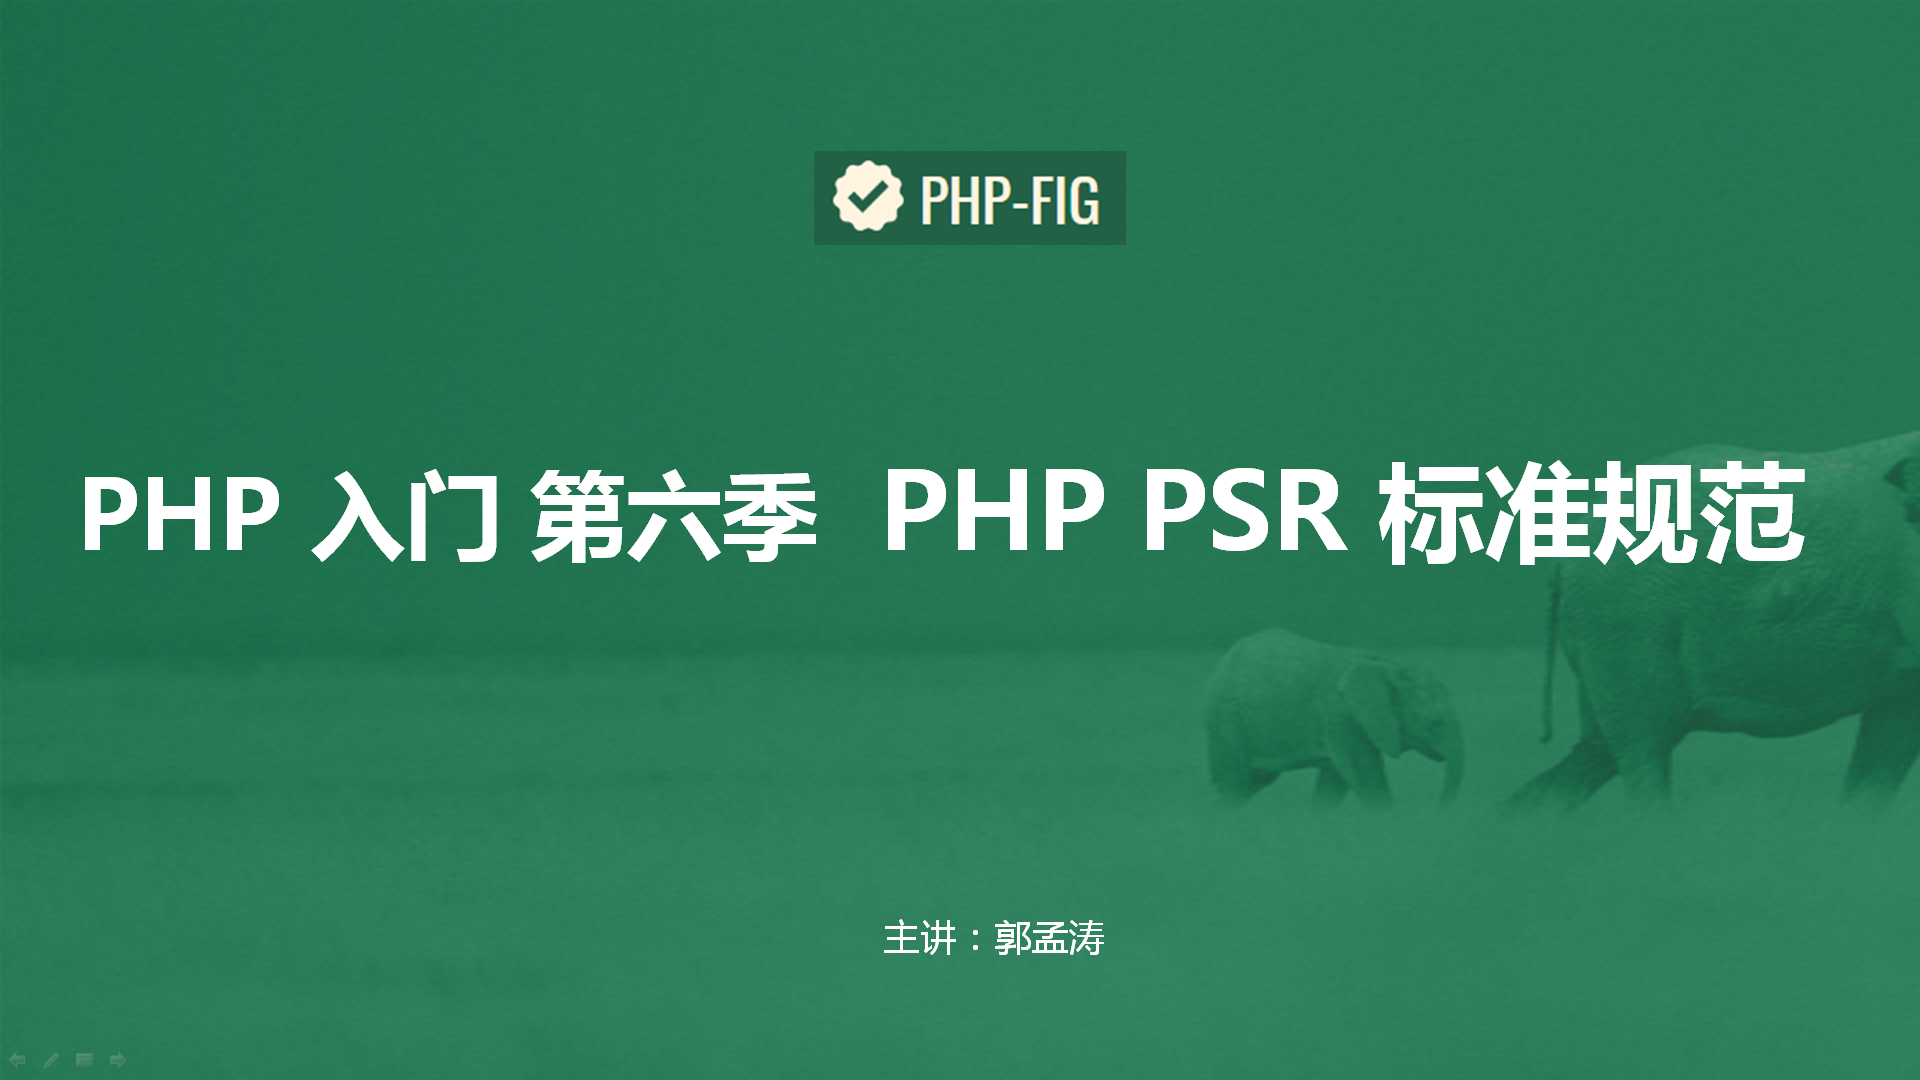 PHP7入门手册视频版第六季 PSR 标准规范